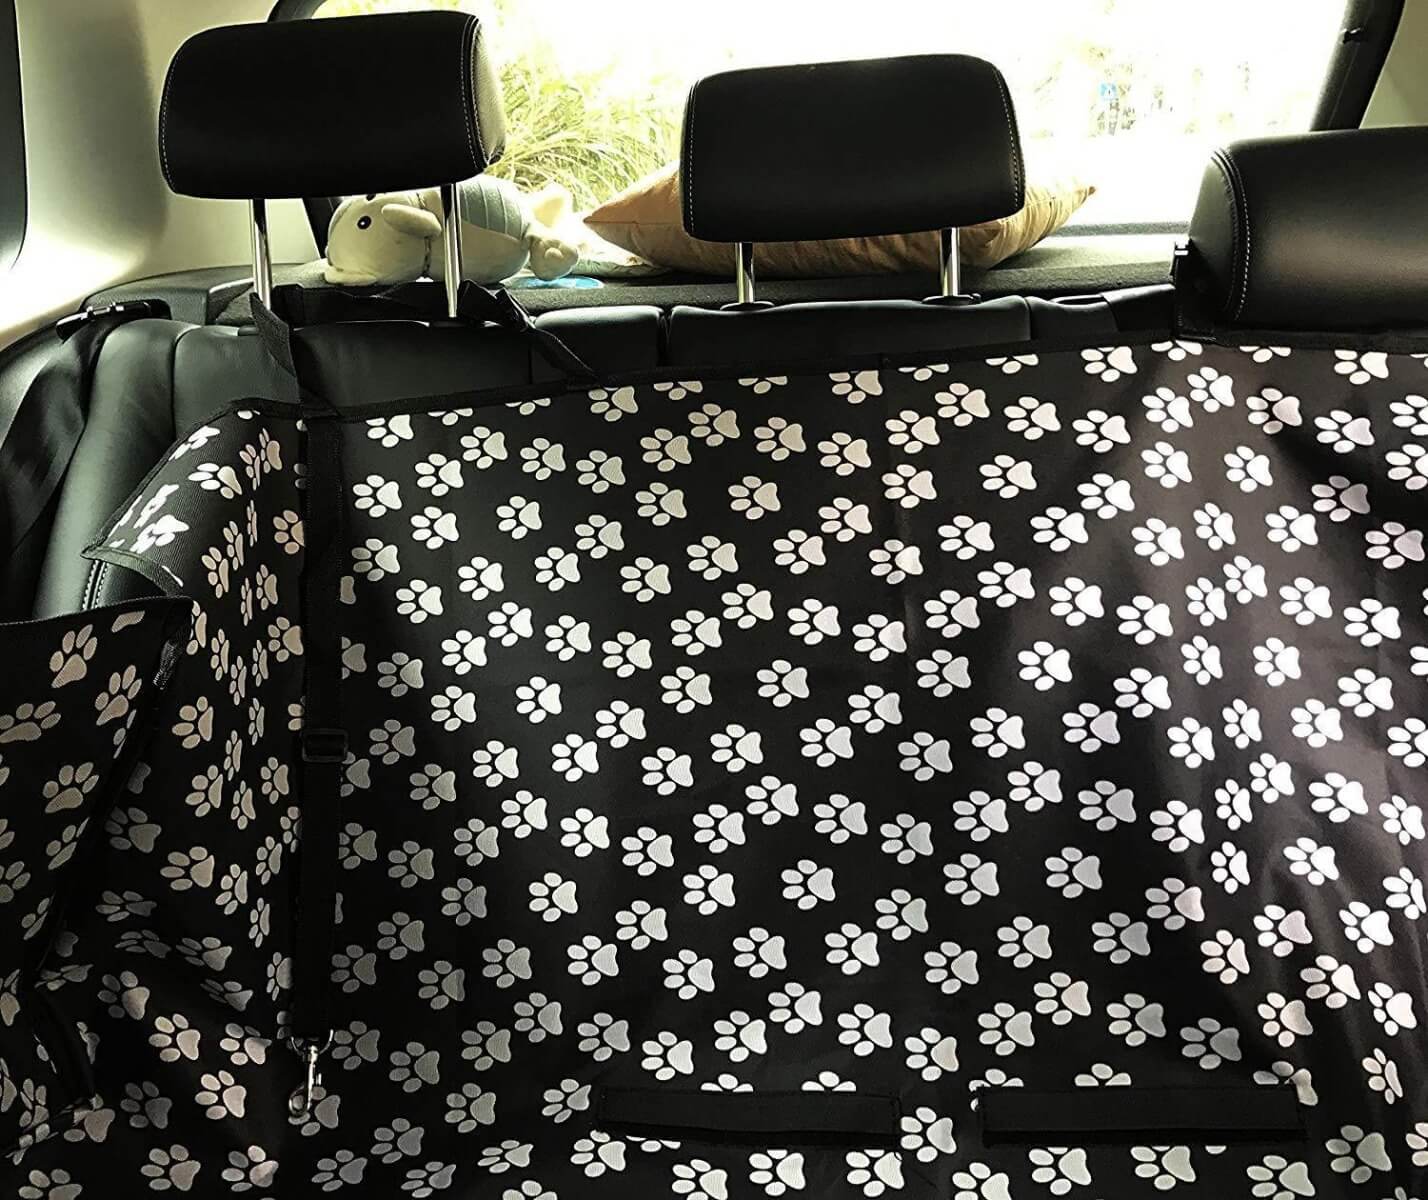 Waterproof Dog Hammock Car Seat Cover. Shop Dog Supplies on Mounteen. Worldwide shipping available.